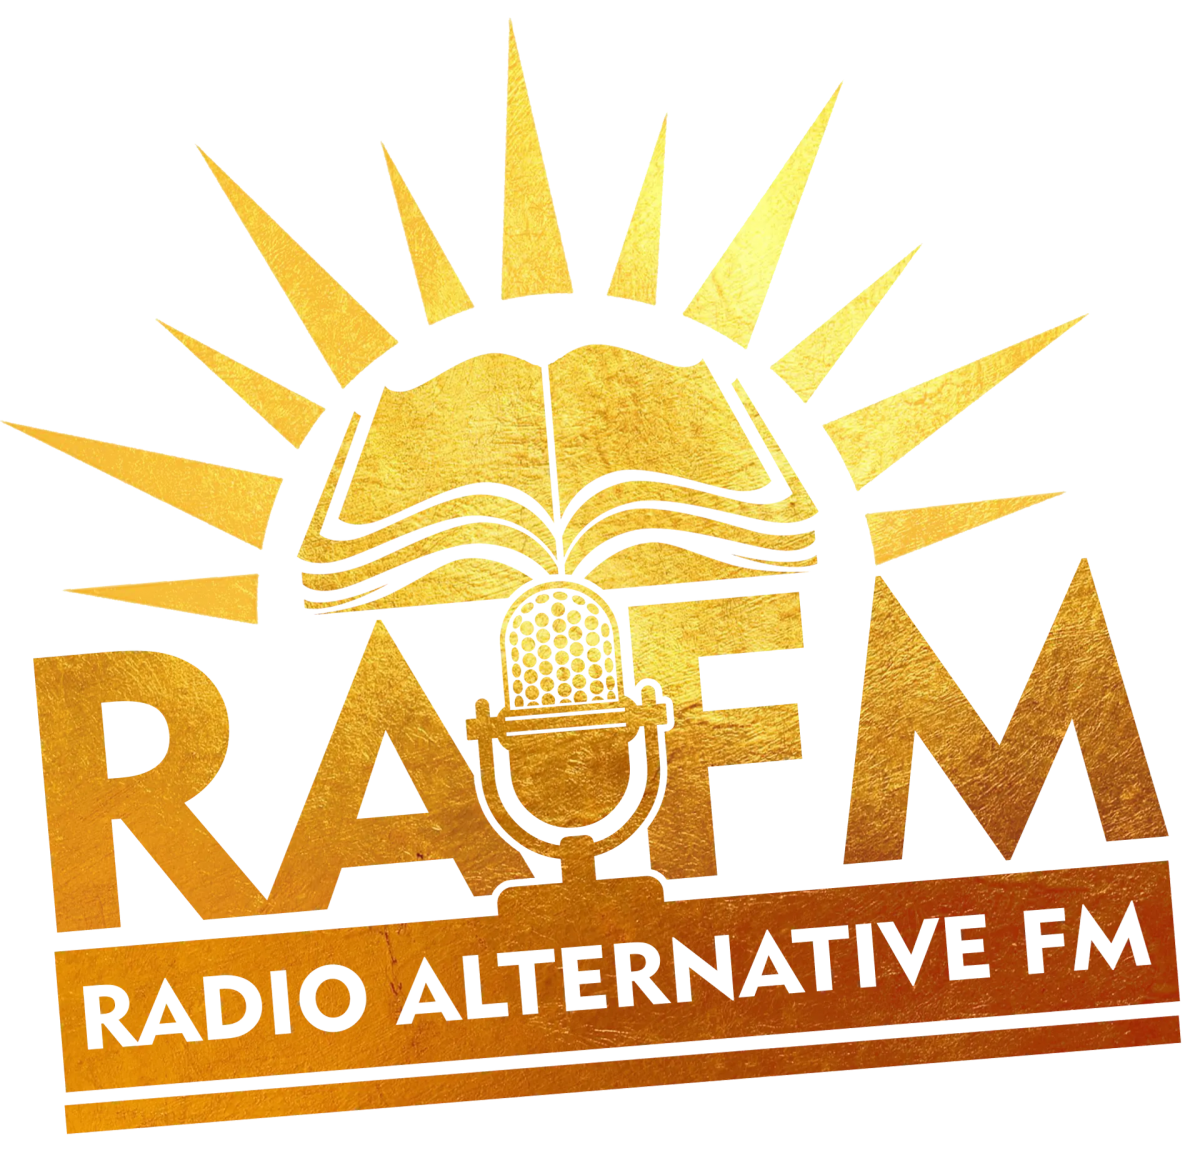 RADIO ALTERNATIVE FM (RAFM)